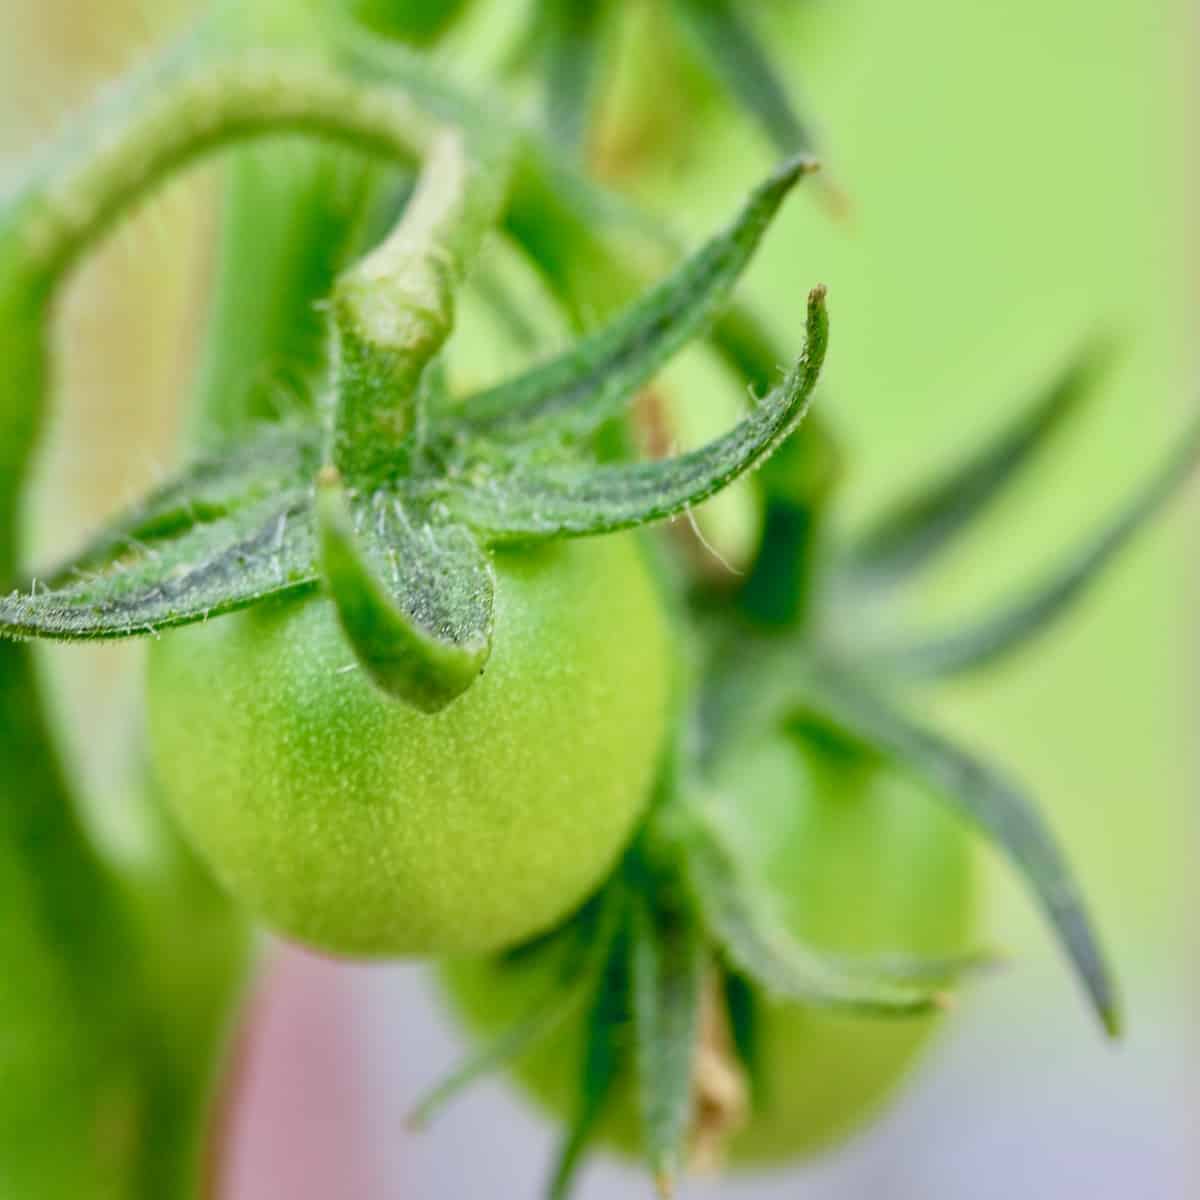 Green tomato on the vine.